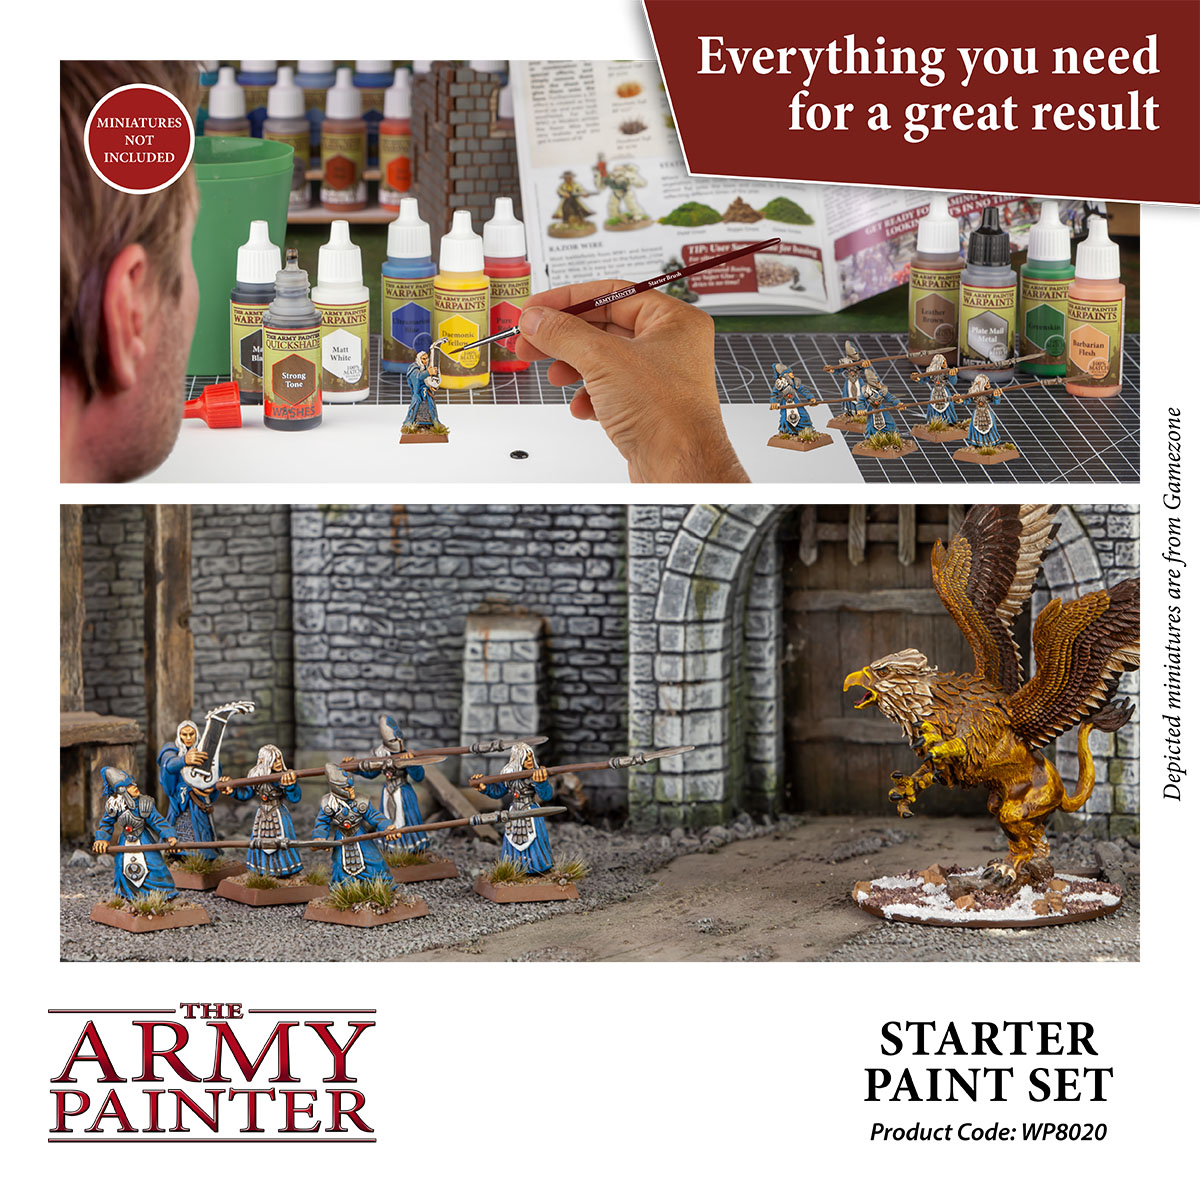 Armada Games - Army Painter Warpaints Hobby Starter Paint Set